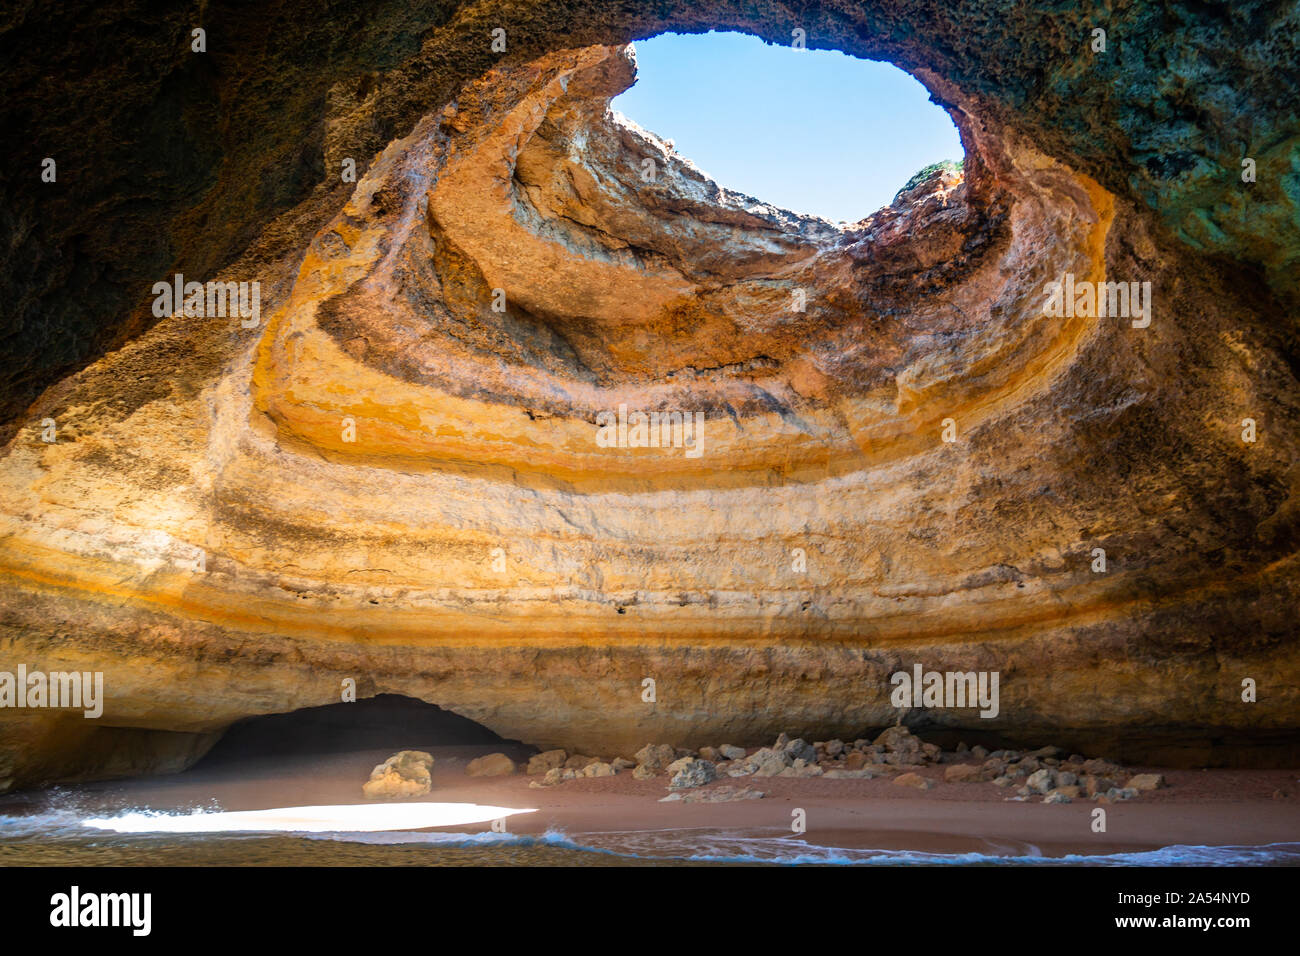 The Benagil cave (Algar de Banagil) is a stunning sea cave in Algarve coastline a popular tourist attraction, Portugal Stock Photo